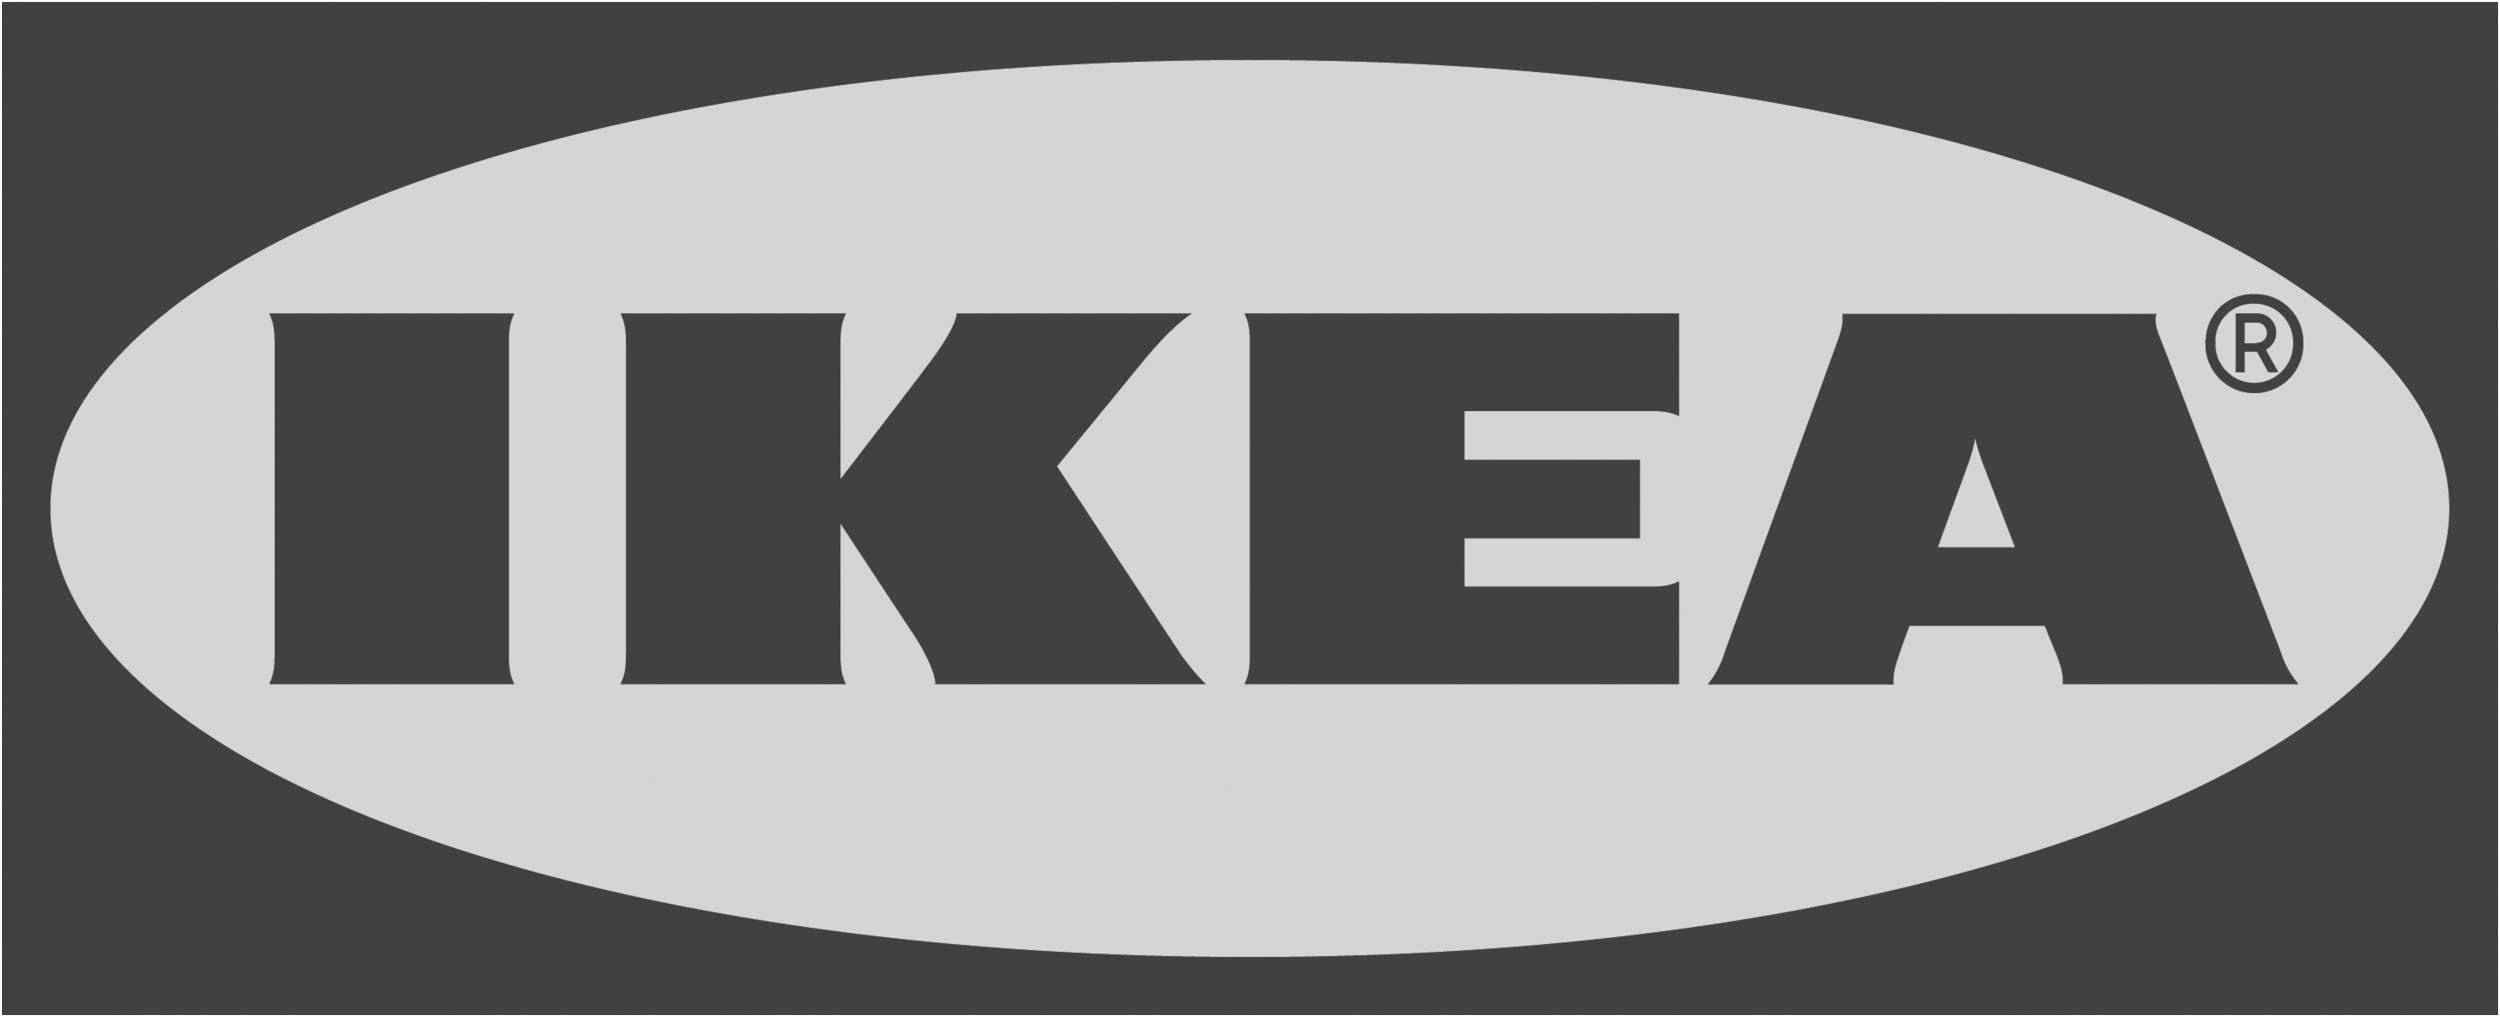 Ikea_logo_grayscale.png